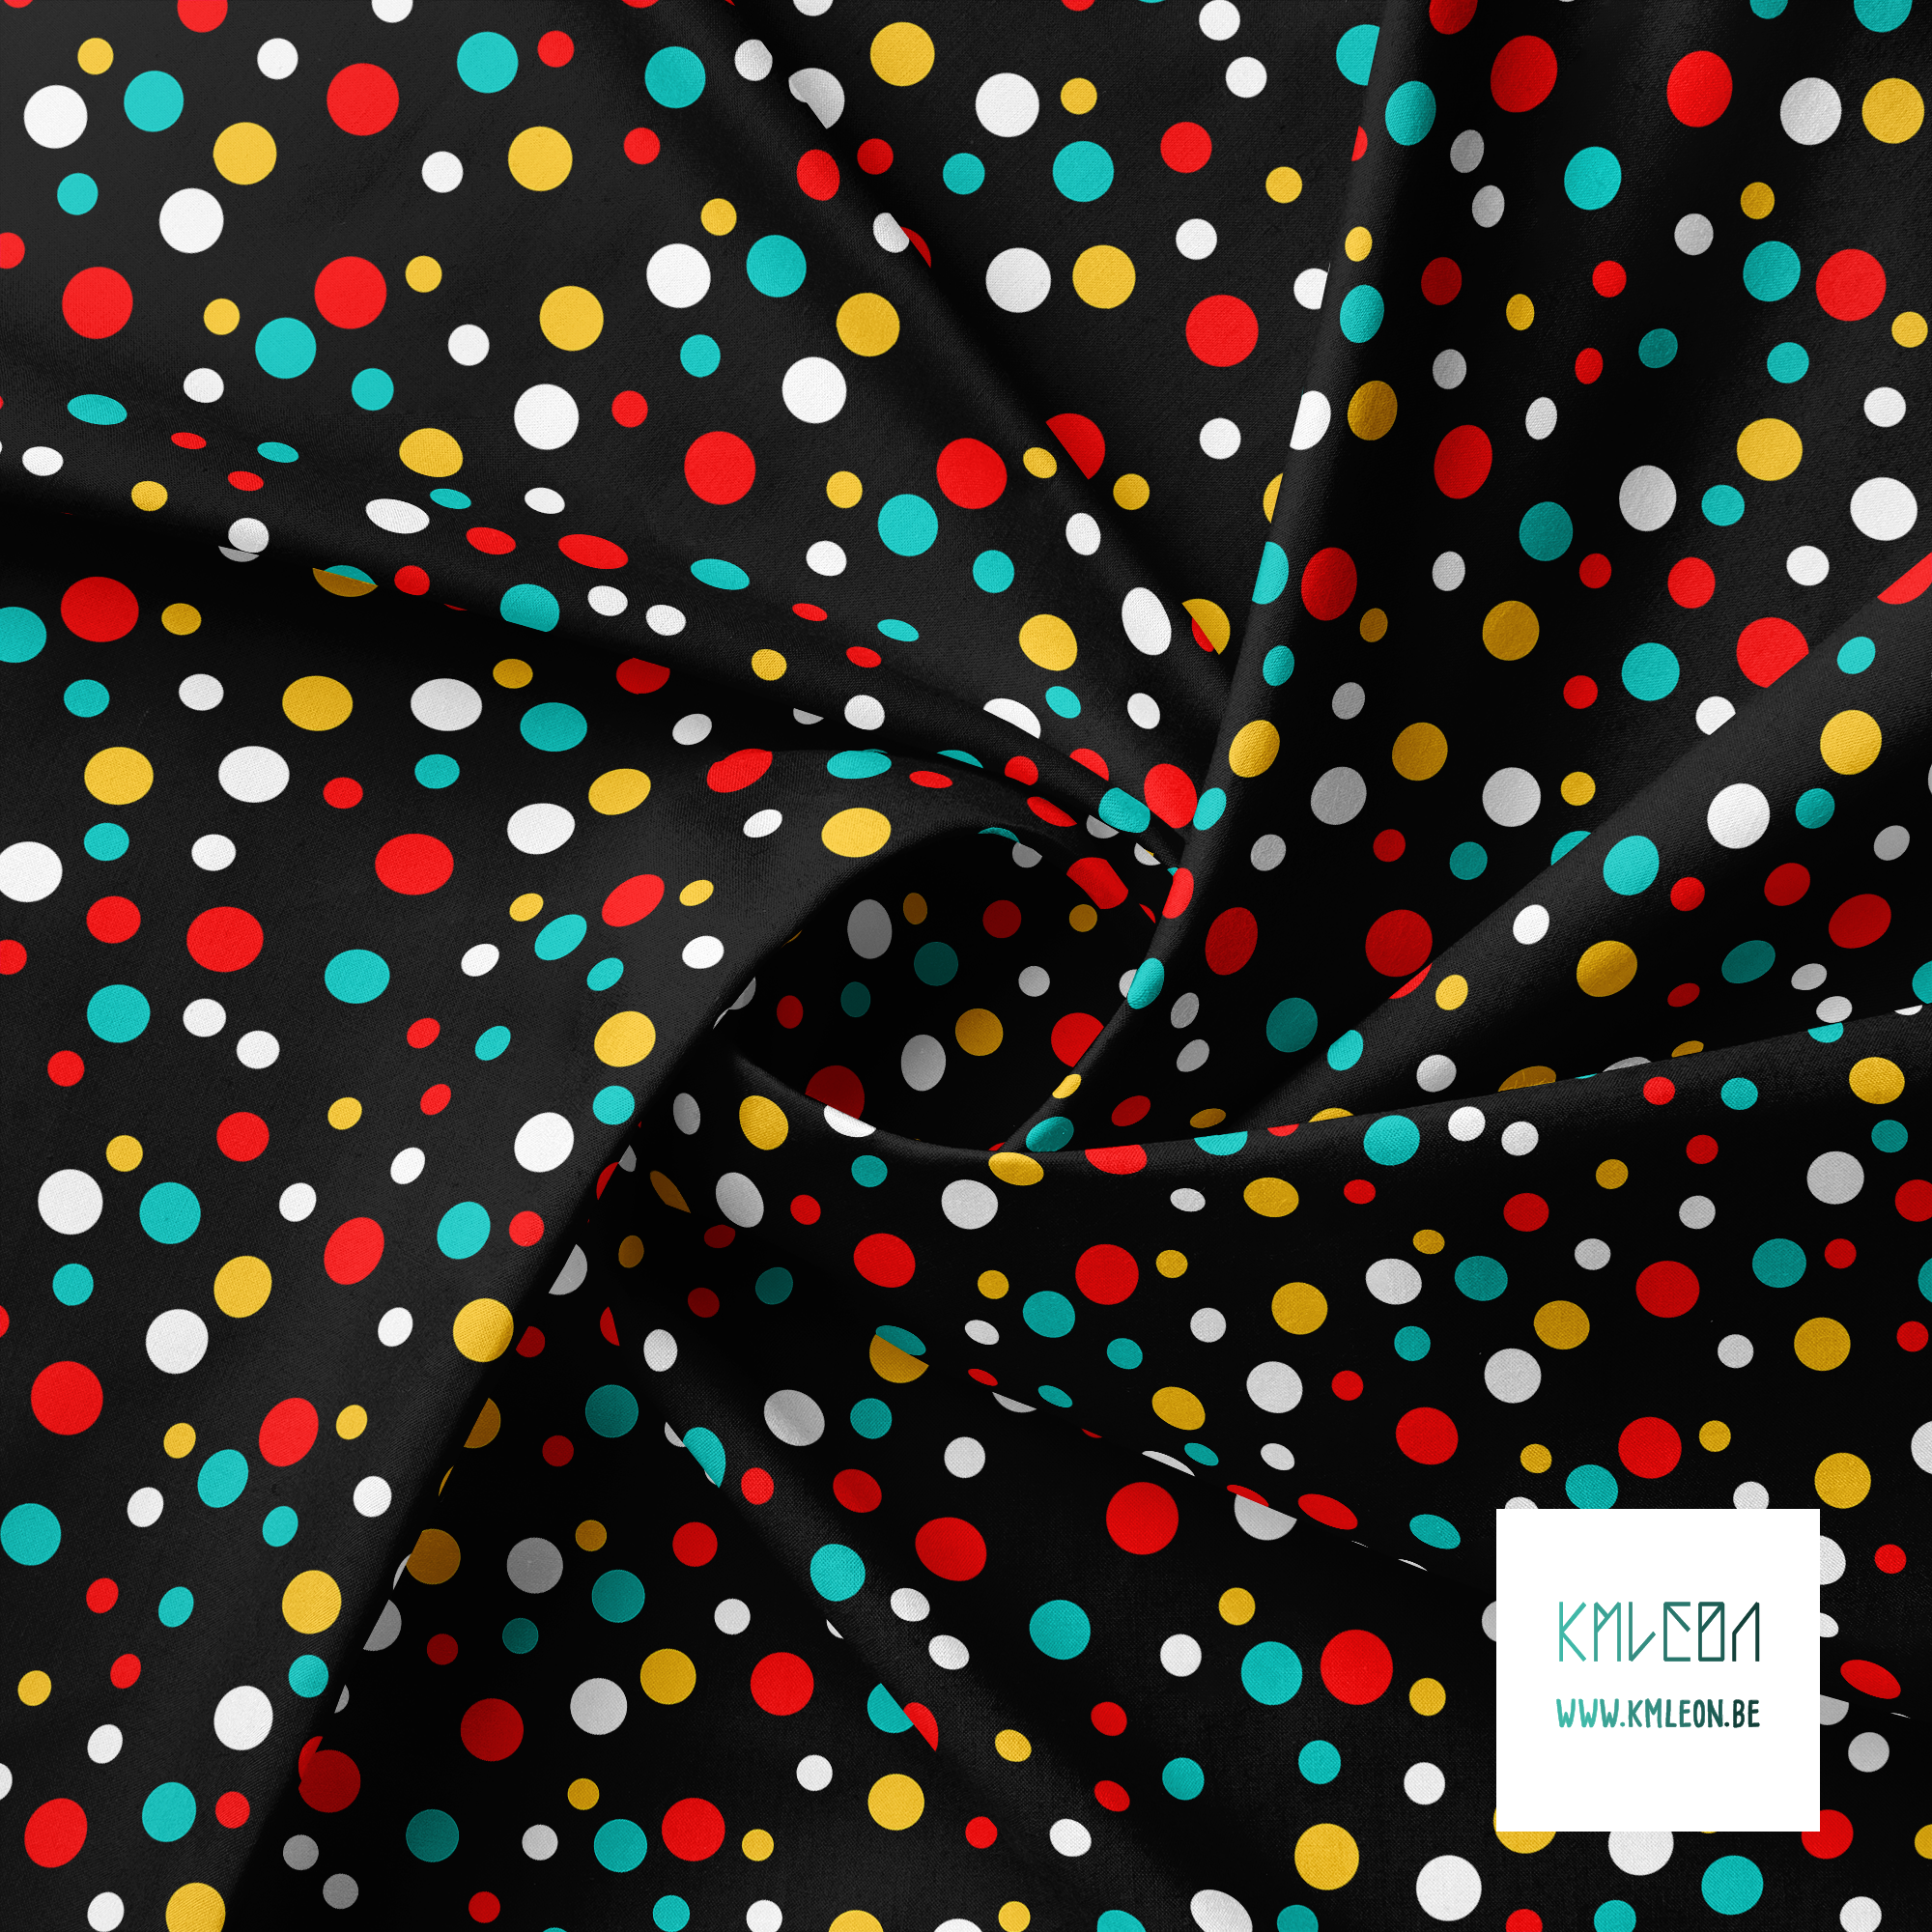 Random teal, yellow and red polka dots fabric